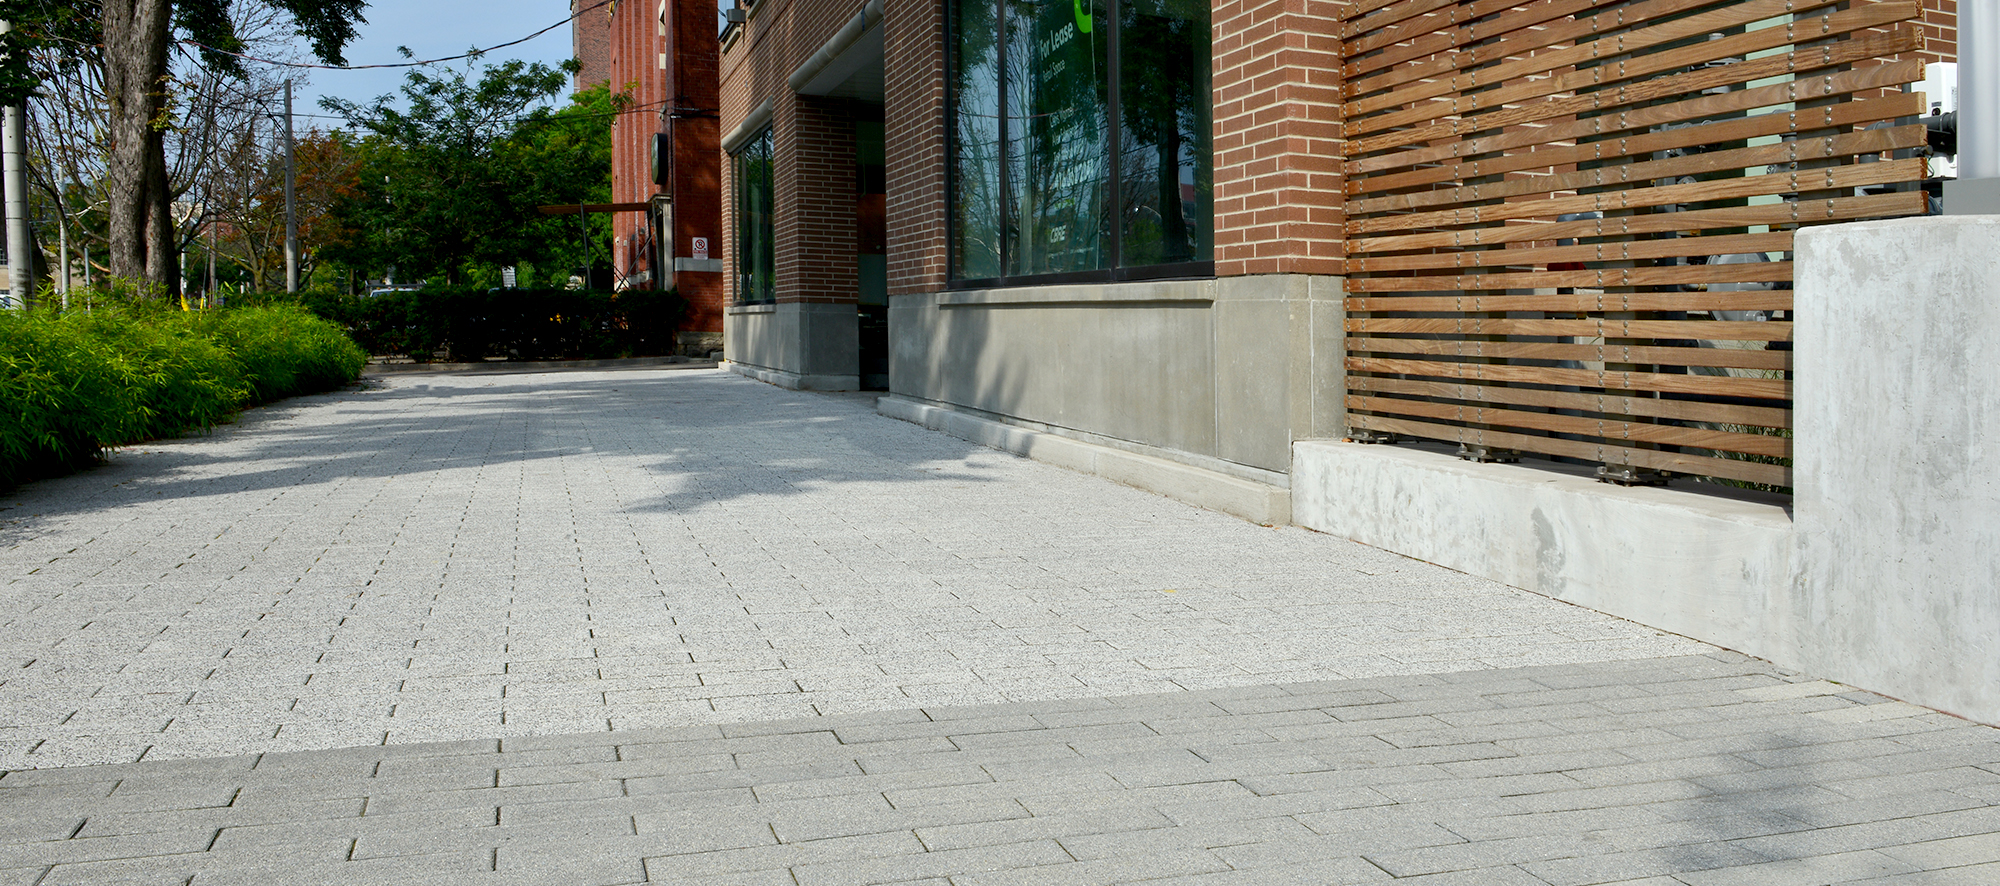 Unilock Promenade Plank pavers in a speckled Umbriano finish sidewalk beside the red brick façade of 400 Wellington condominiums in Toronto.